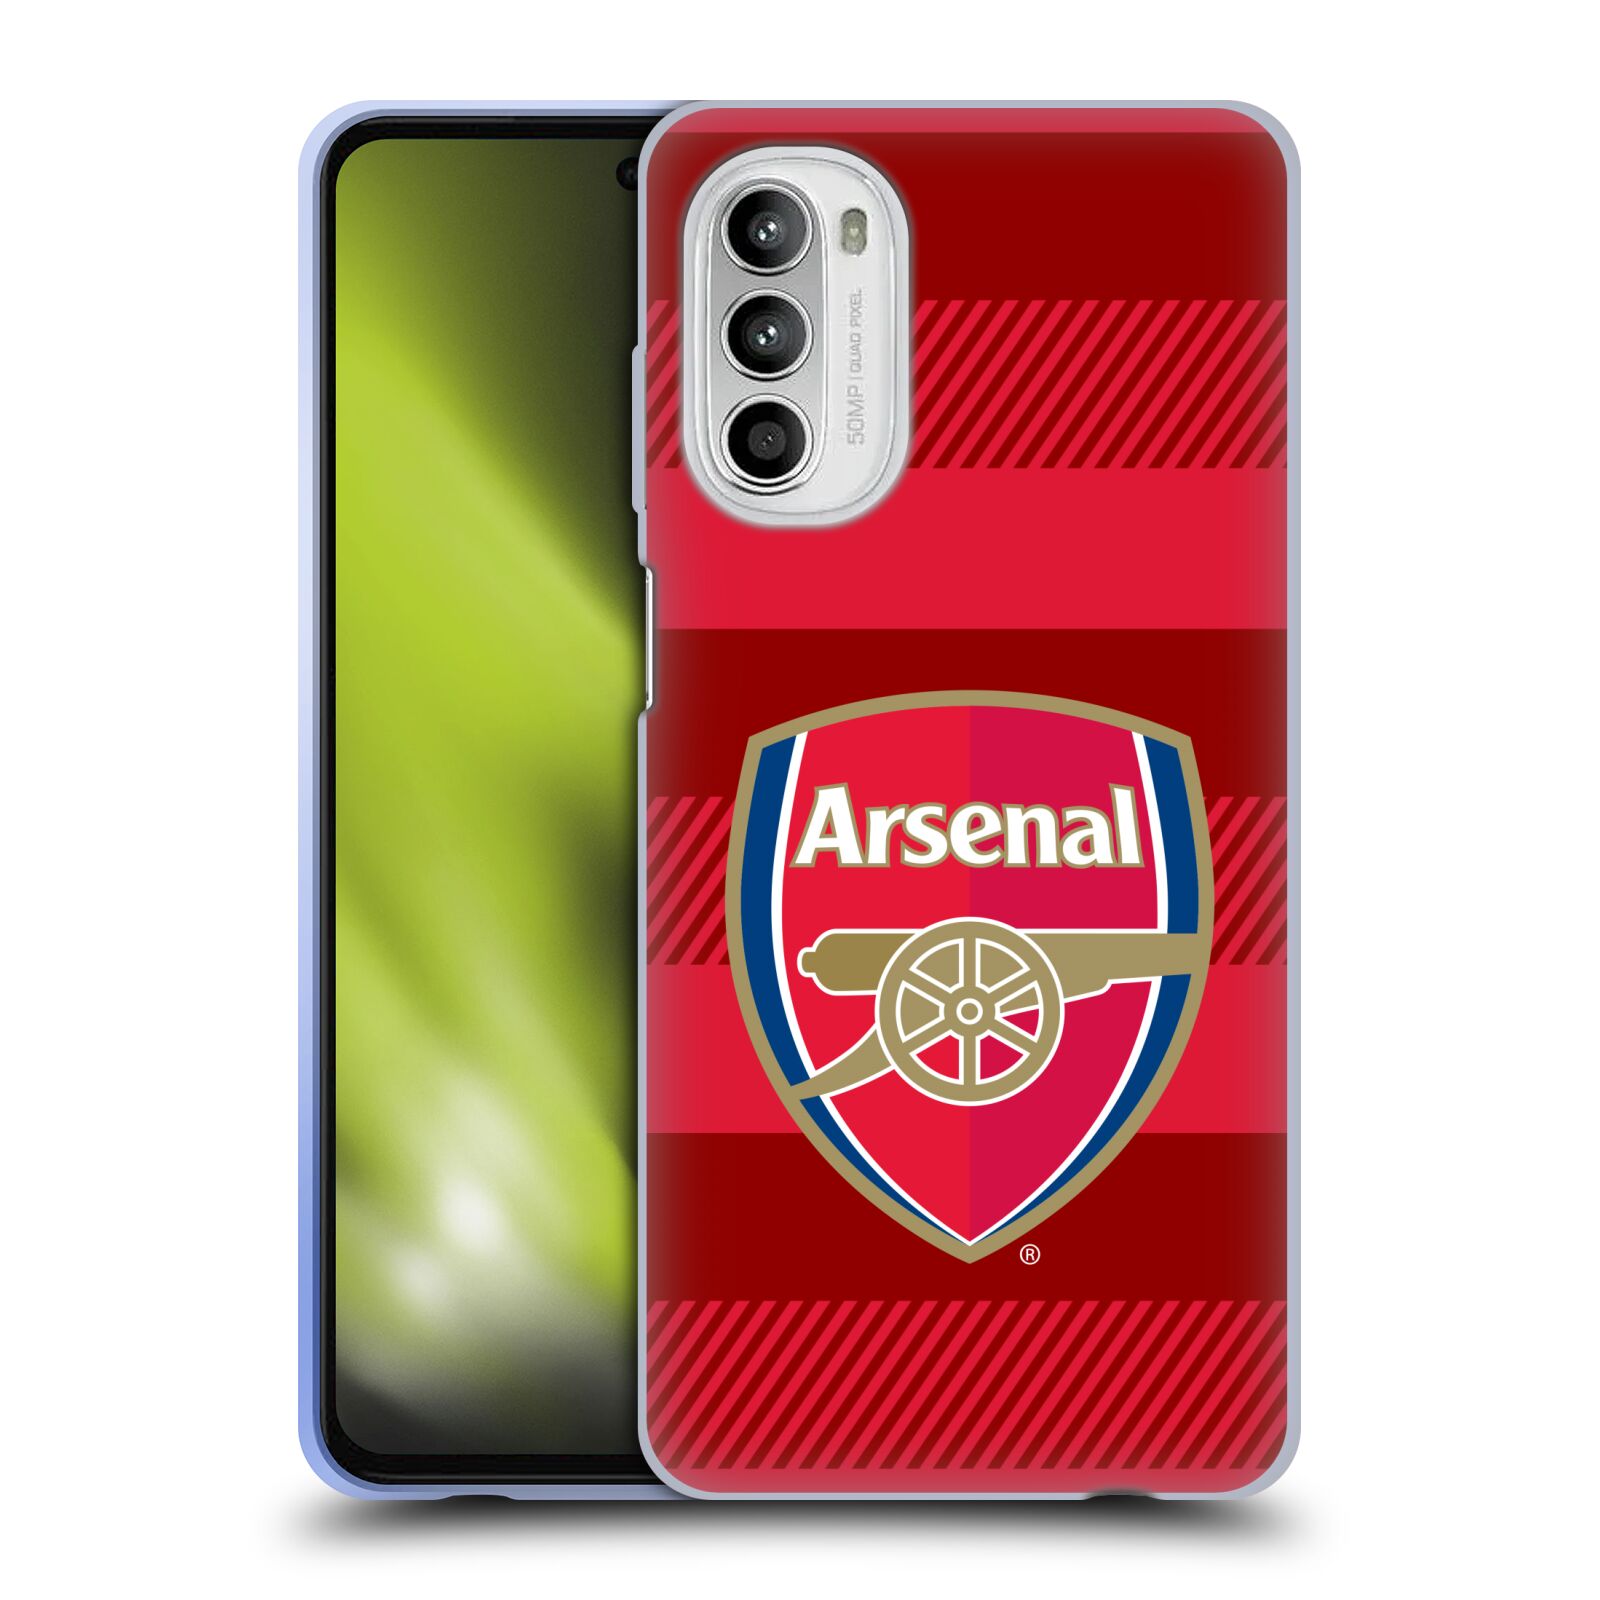 Silikonové pouzdro na mobil Motorola Moto G52 - Head Case - Arsenal FC - Logo s pruhy